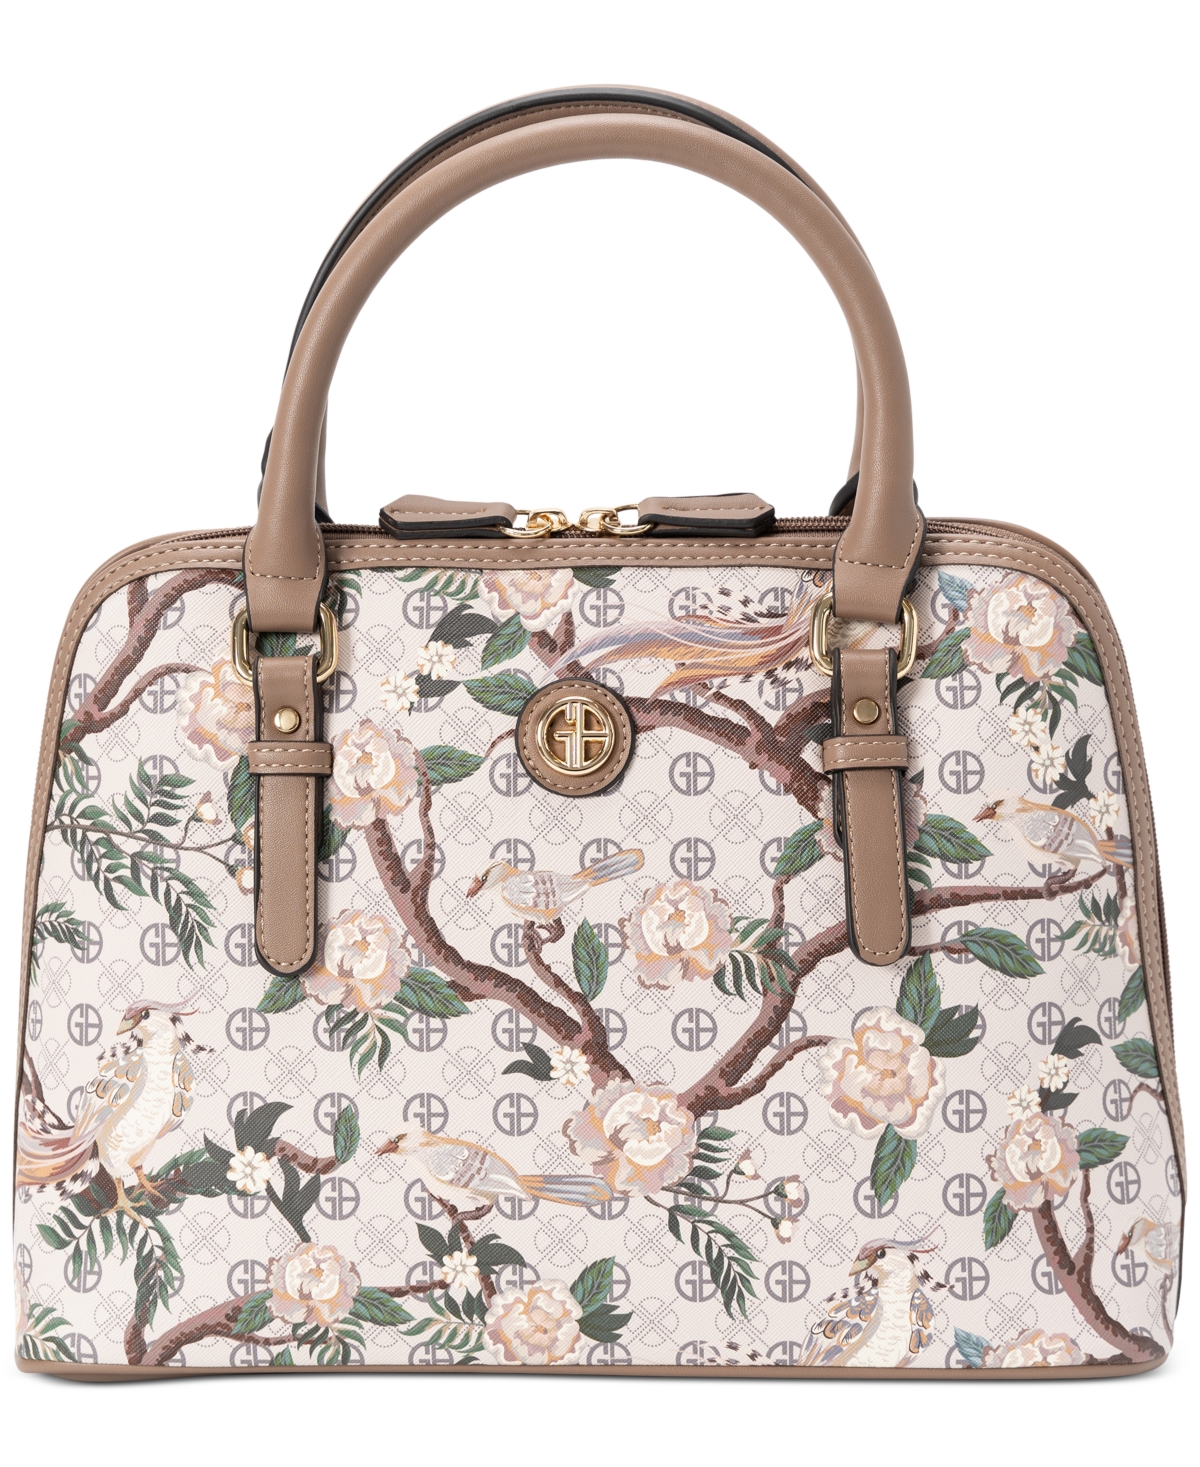 Giani Bernini handbag floral